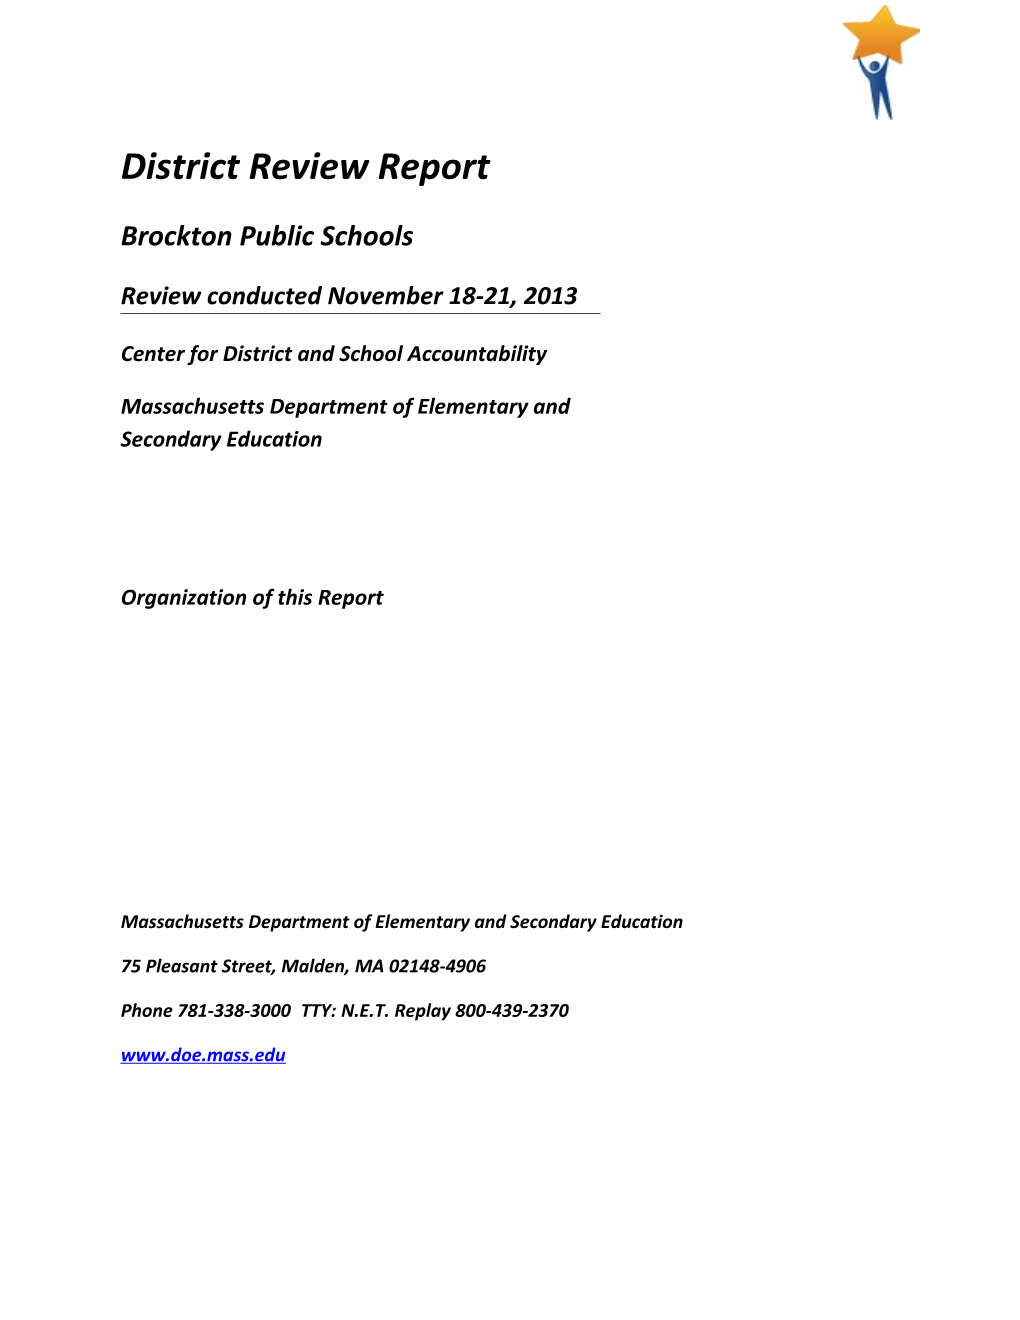 Brockton District Review Report, 2013